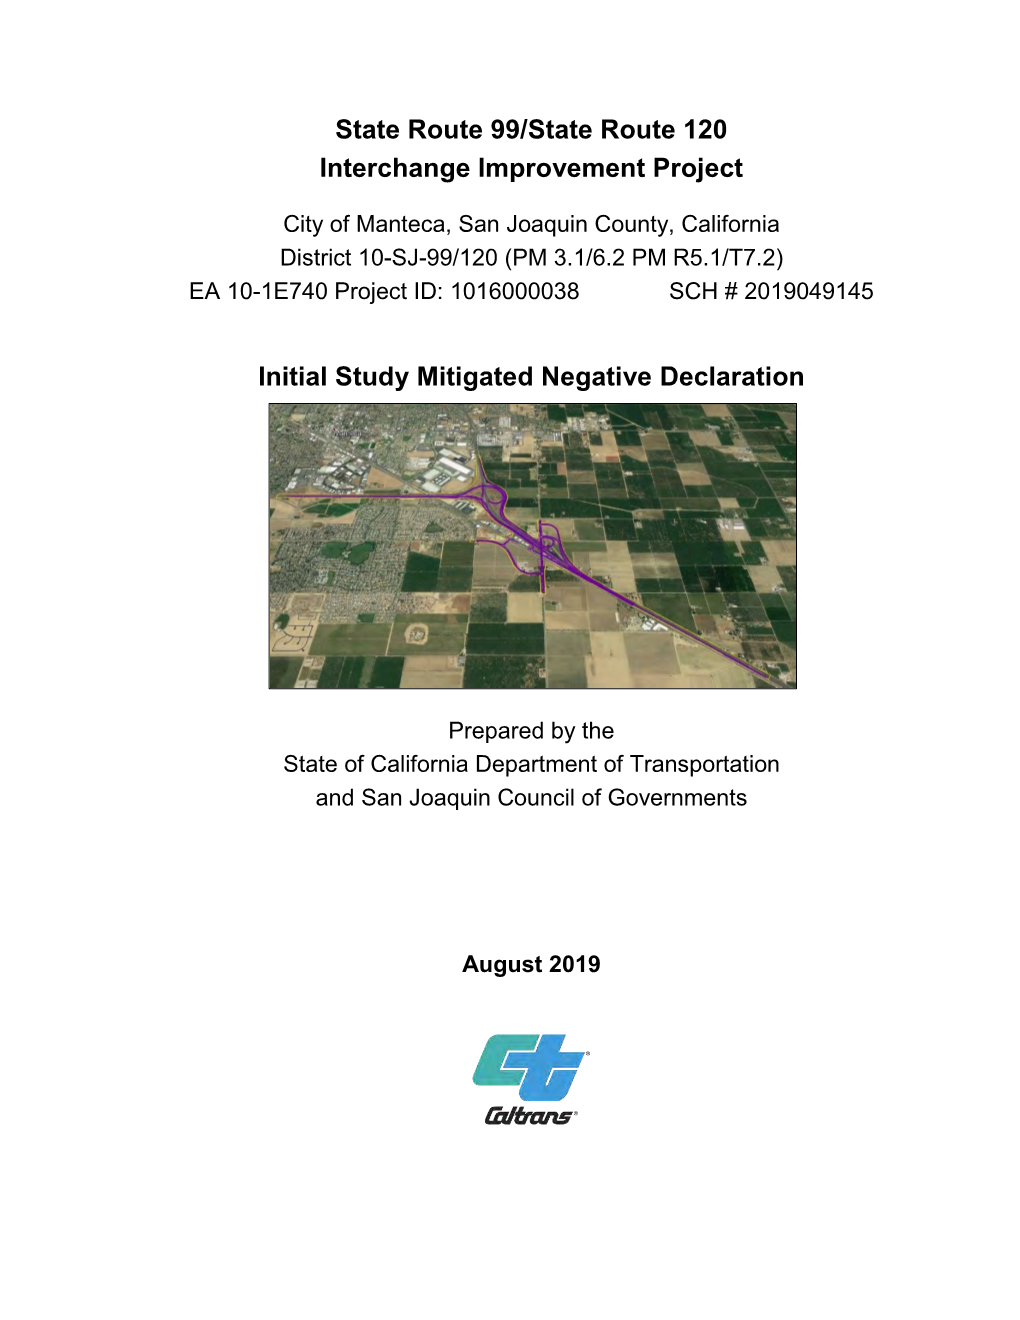 SR 99 and SR 120 Interchange Improvements Initial Study